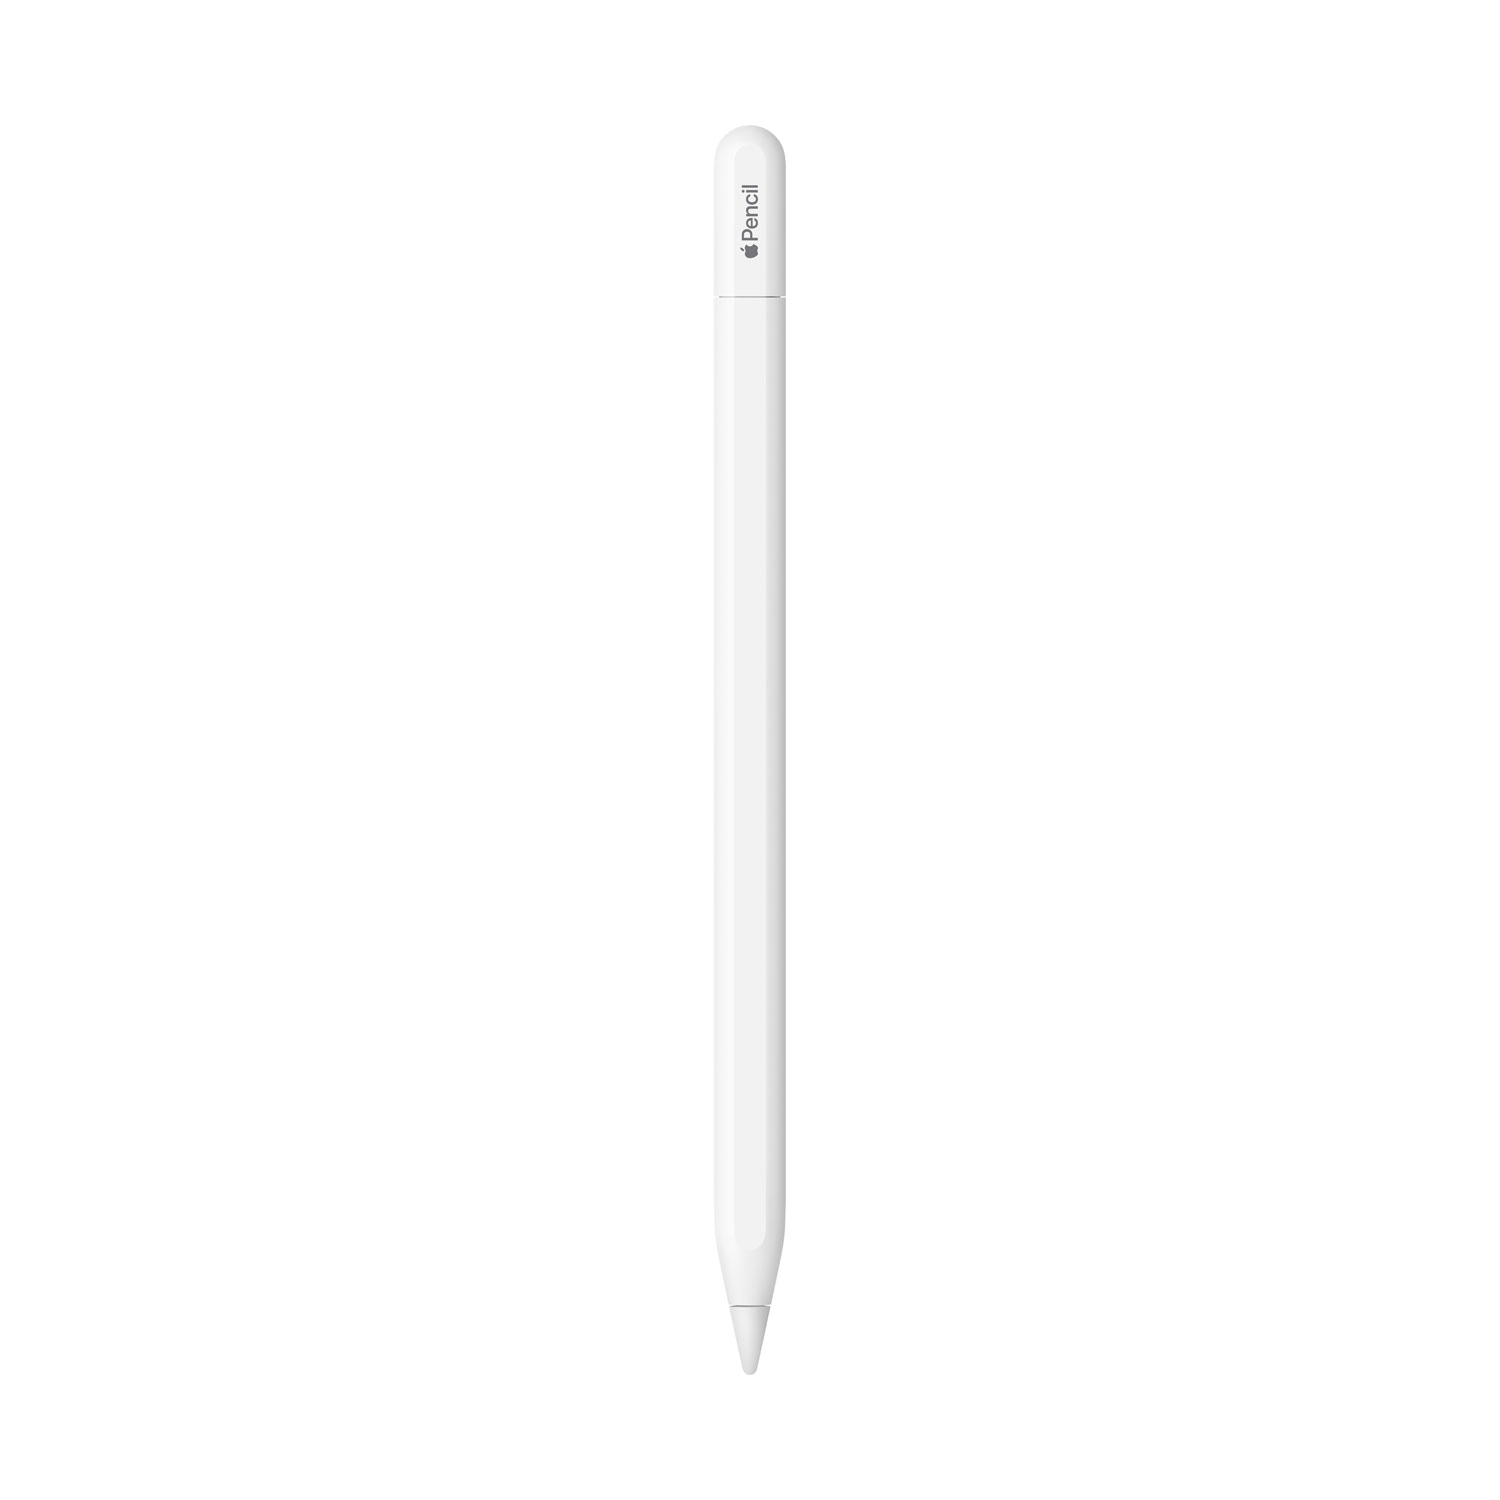 Apple Pencil (USB-C) (3rd Generation) for iPad - White